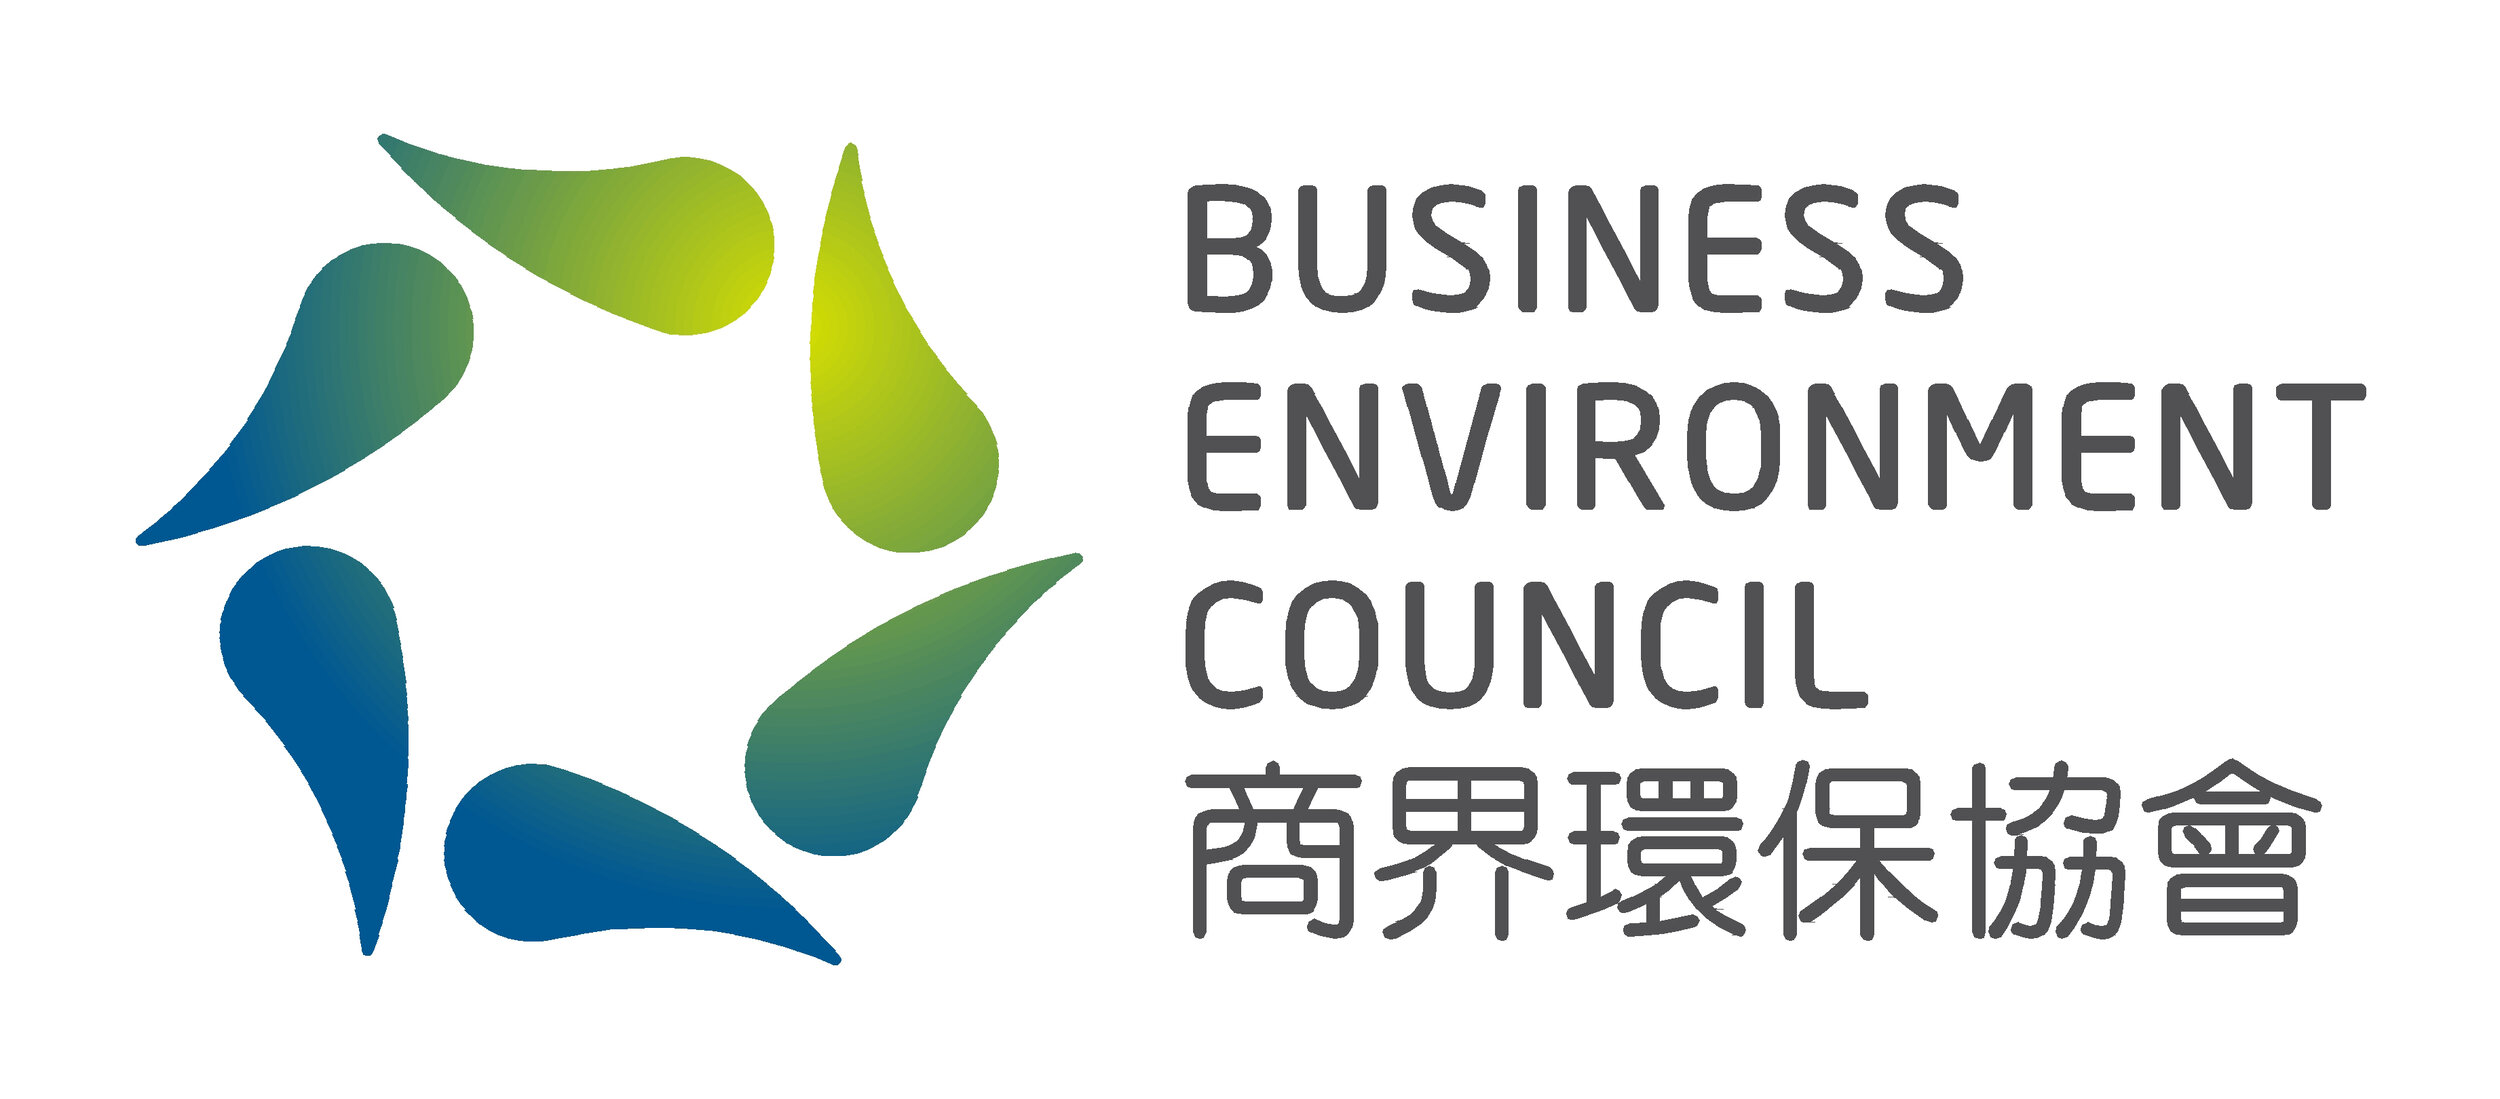 BusinessEC Colour Logo horizontal JPG - BEC Policy _ Research.JPG